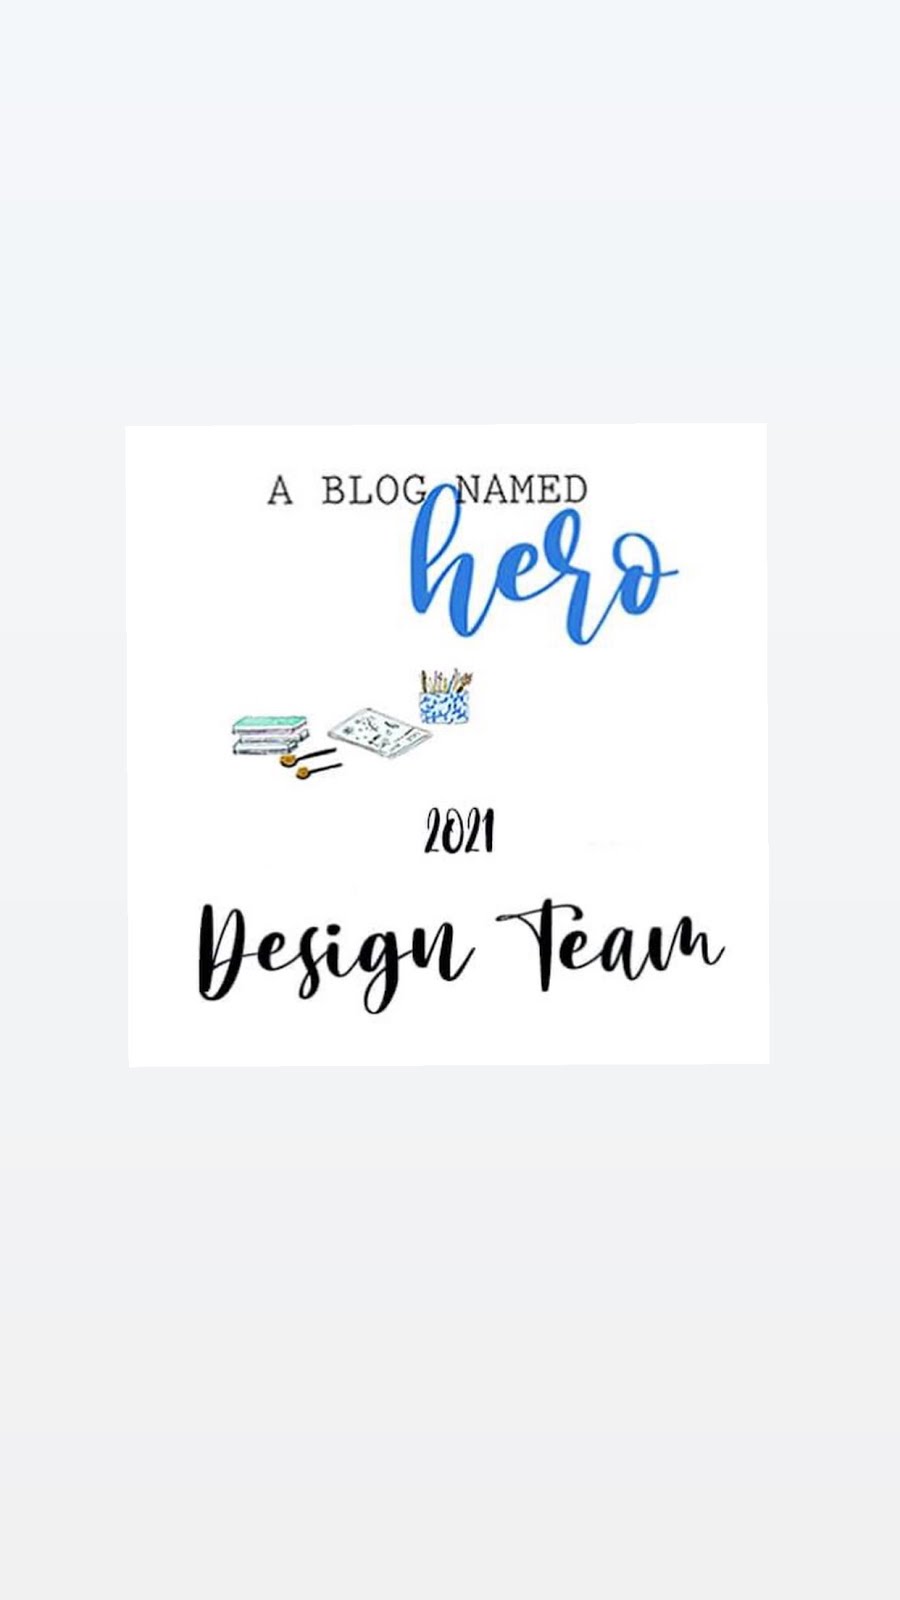 Design Team - A Blog Named Hero